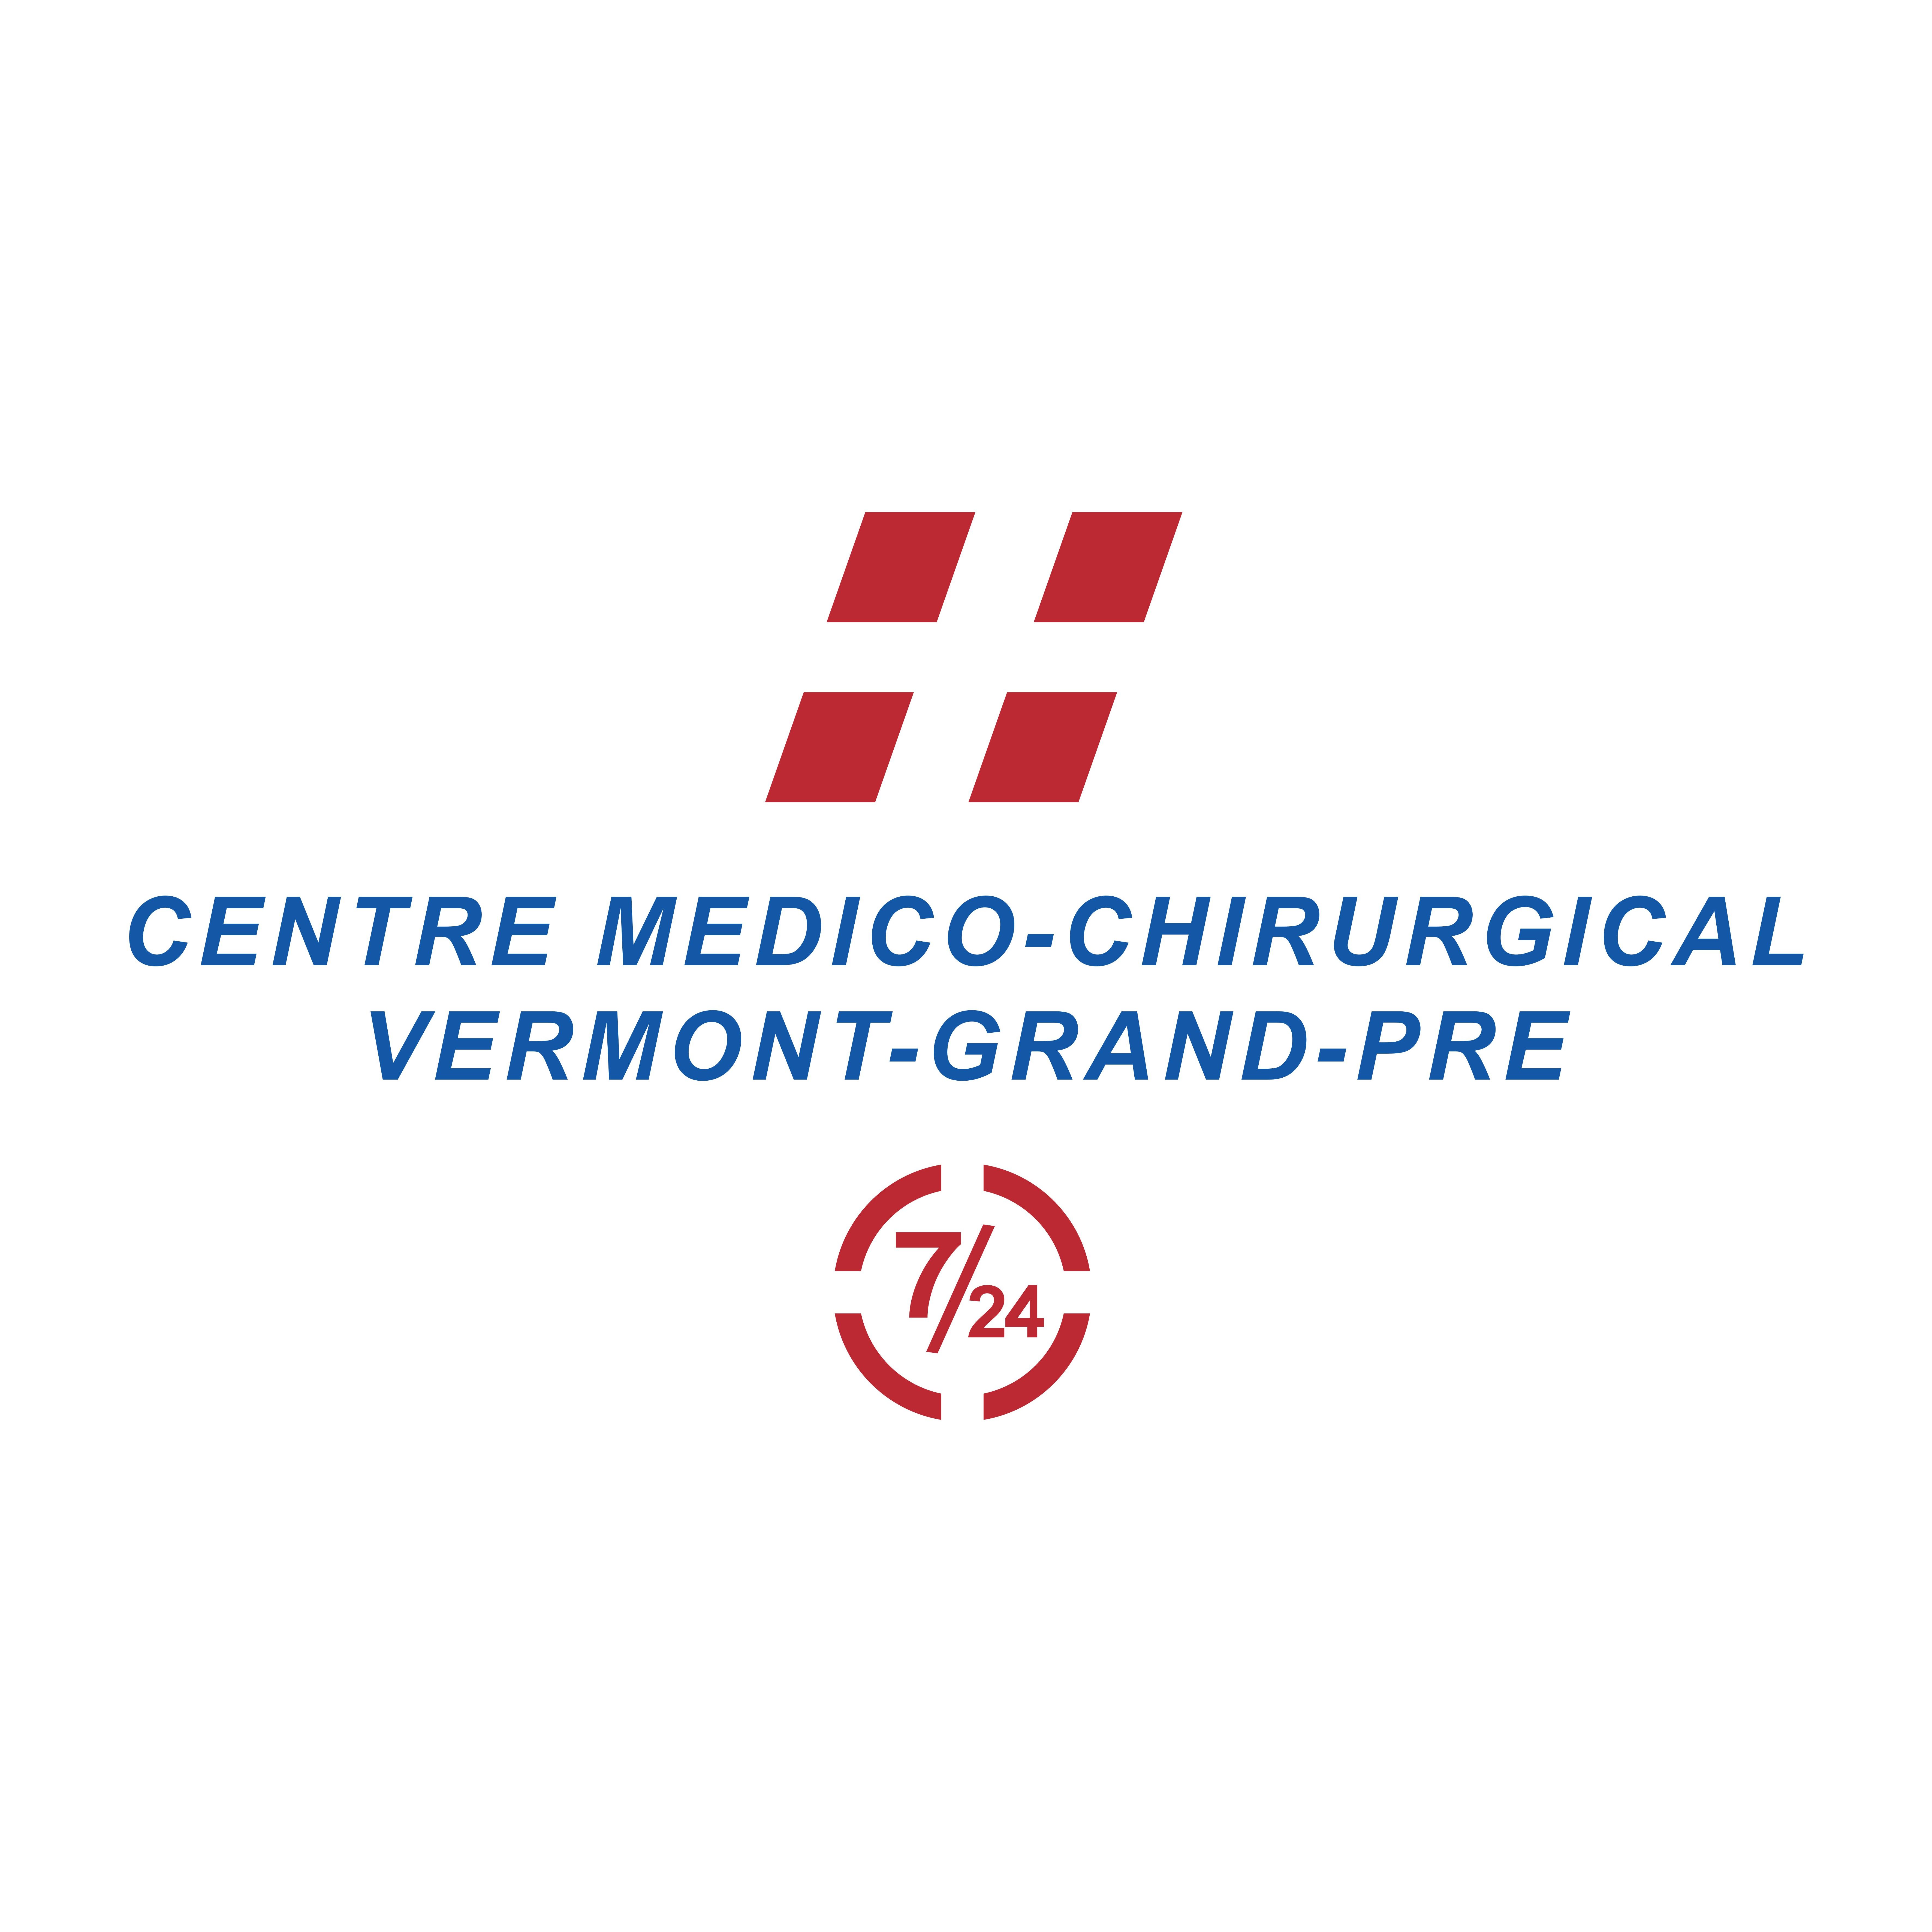 Centre Médico-Chirurgical Vermont-Grand-Pré SA - Emergency Care Service - Genève - 022 734 51 50 Switzerland | ShowMeLocal.com